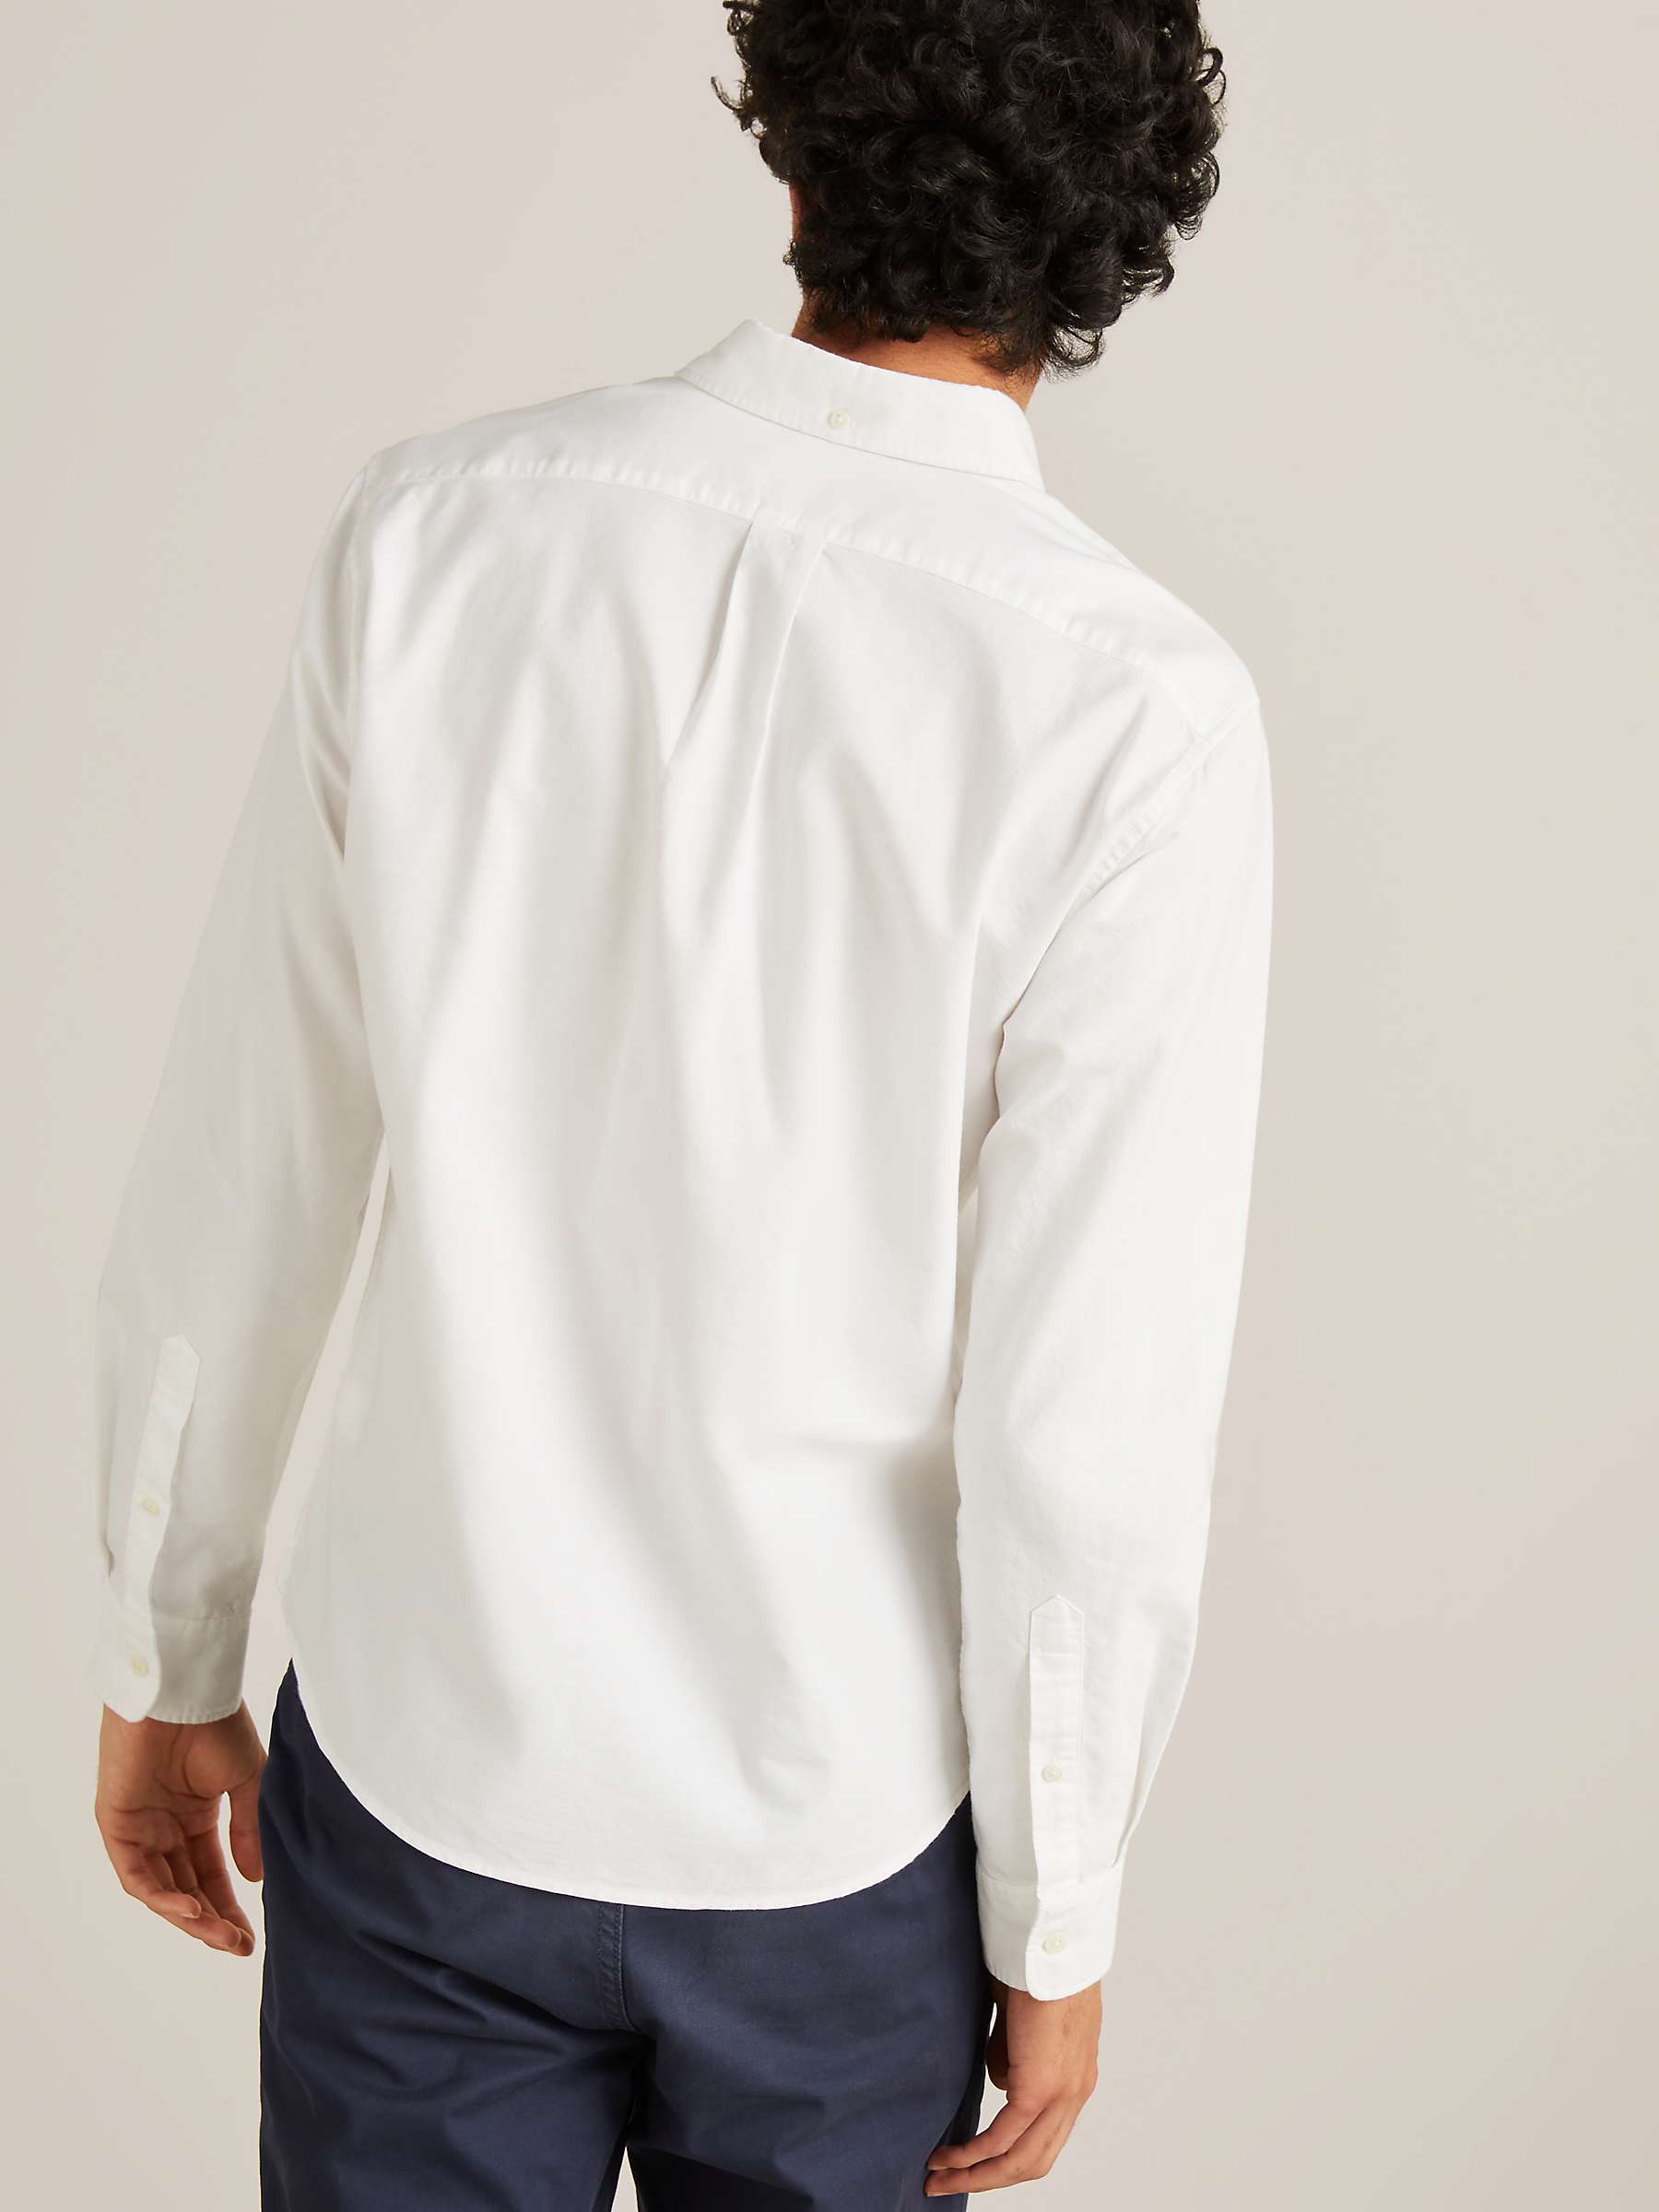 Buy John Lewis Slim Fit Cotton Oxford Button Down Shirt Online at johnlewis.com